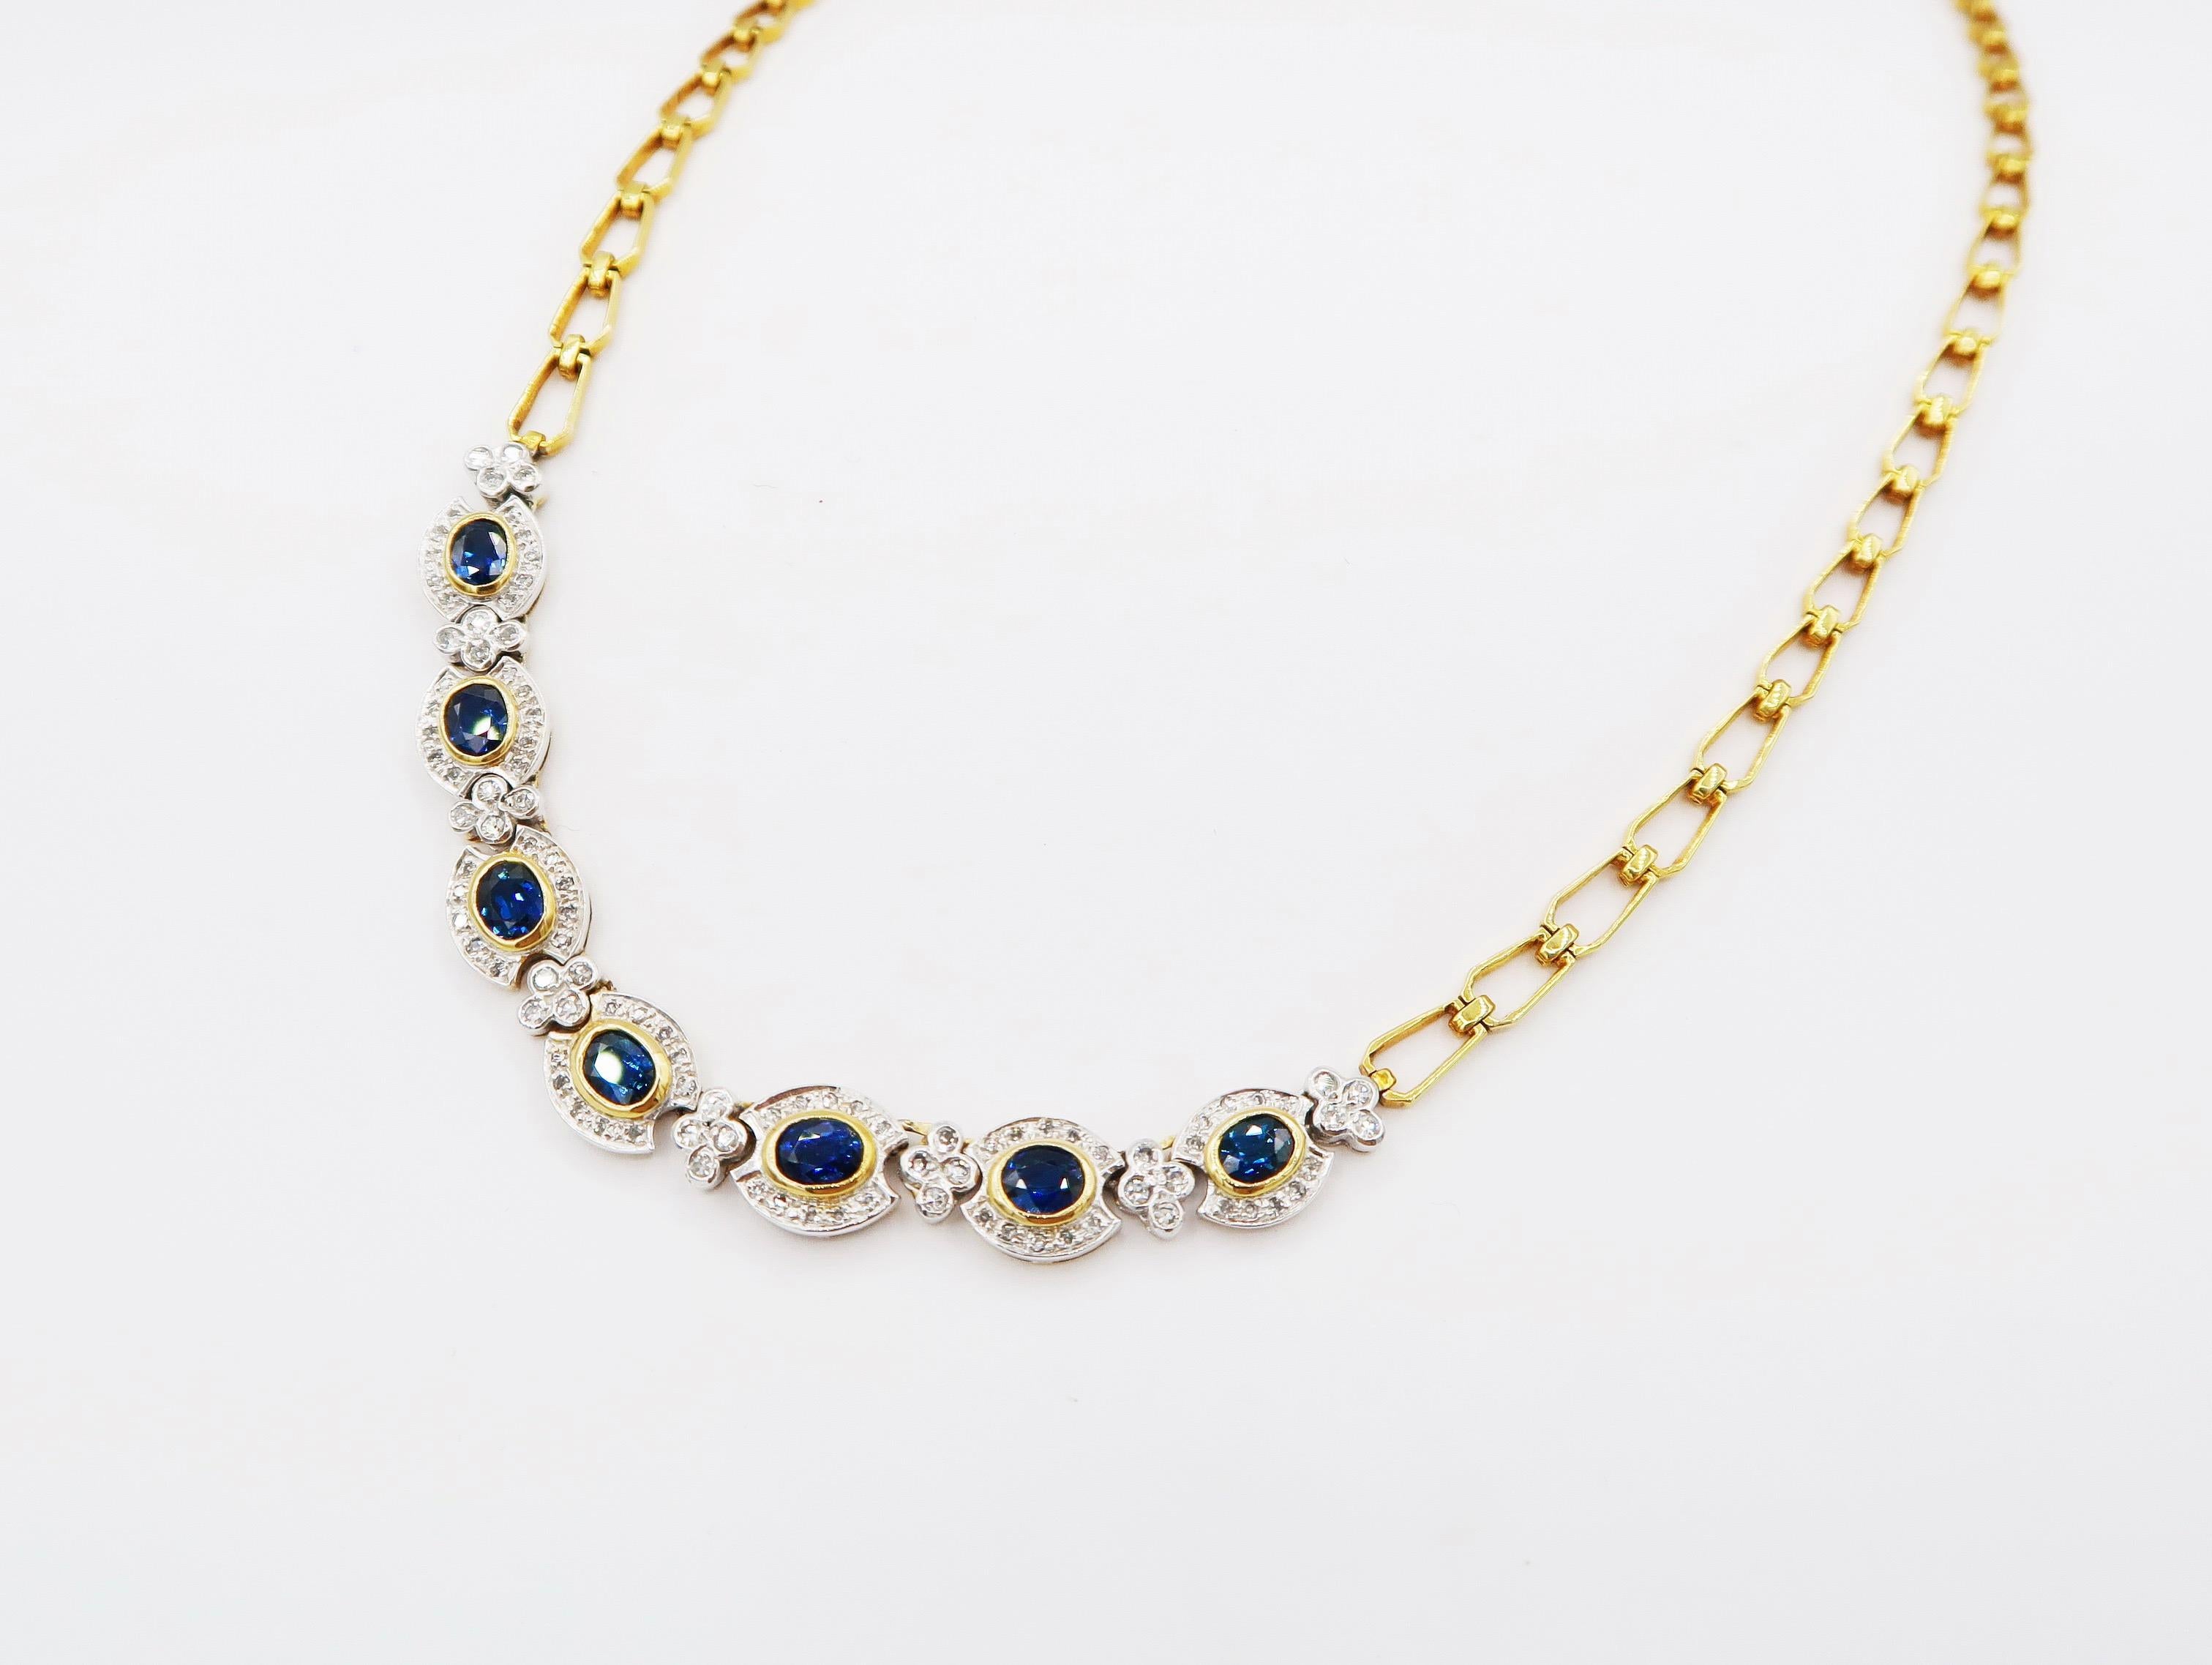 Scalloped Oval Deep Blue Sapphire Pavé Diamond Clover Motif Link Gold Necklace

Gold: 14K Gold, 17.80 g
Sapphire: 6.95 ct
Diamond: 1.65 ct

Length: 18 inches

